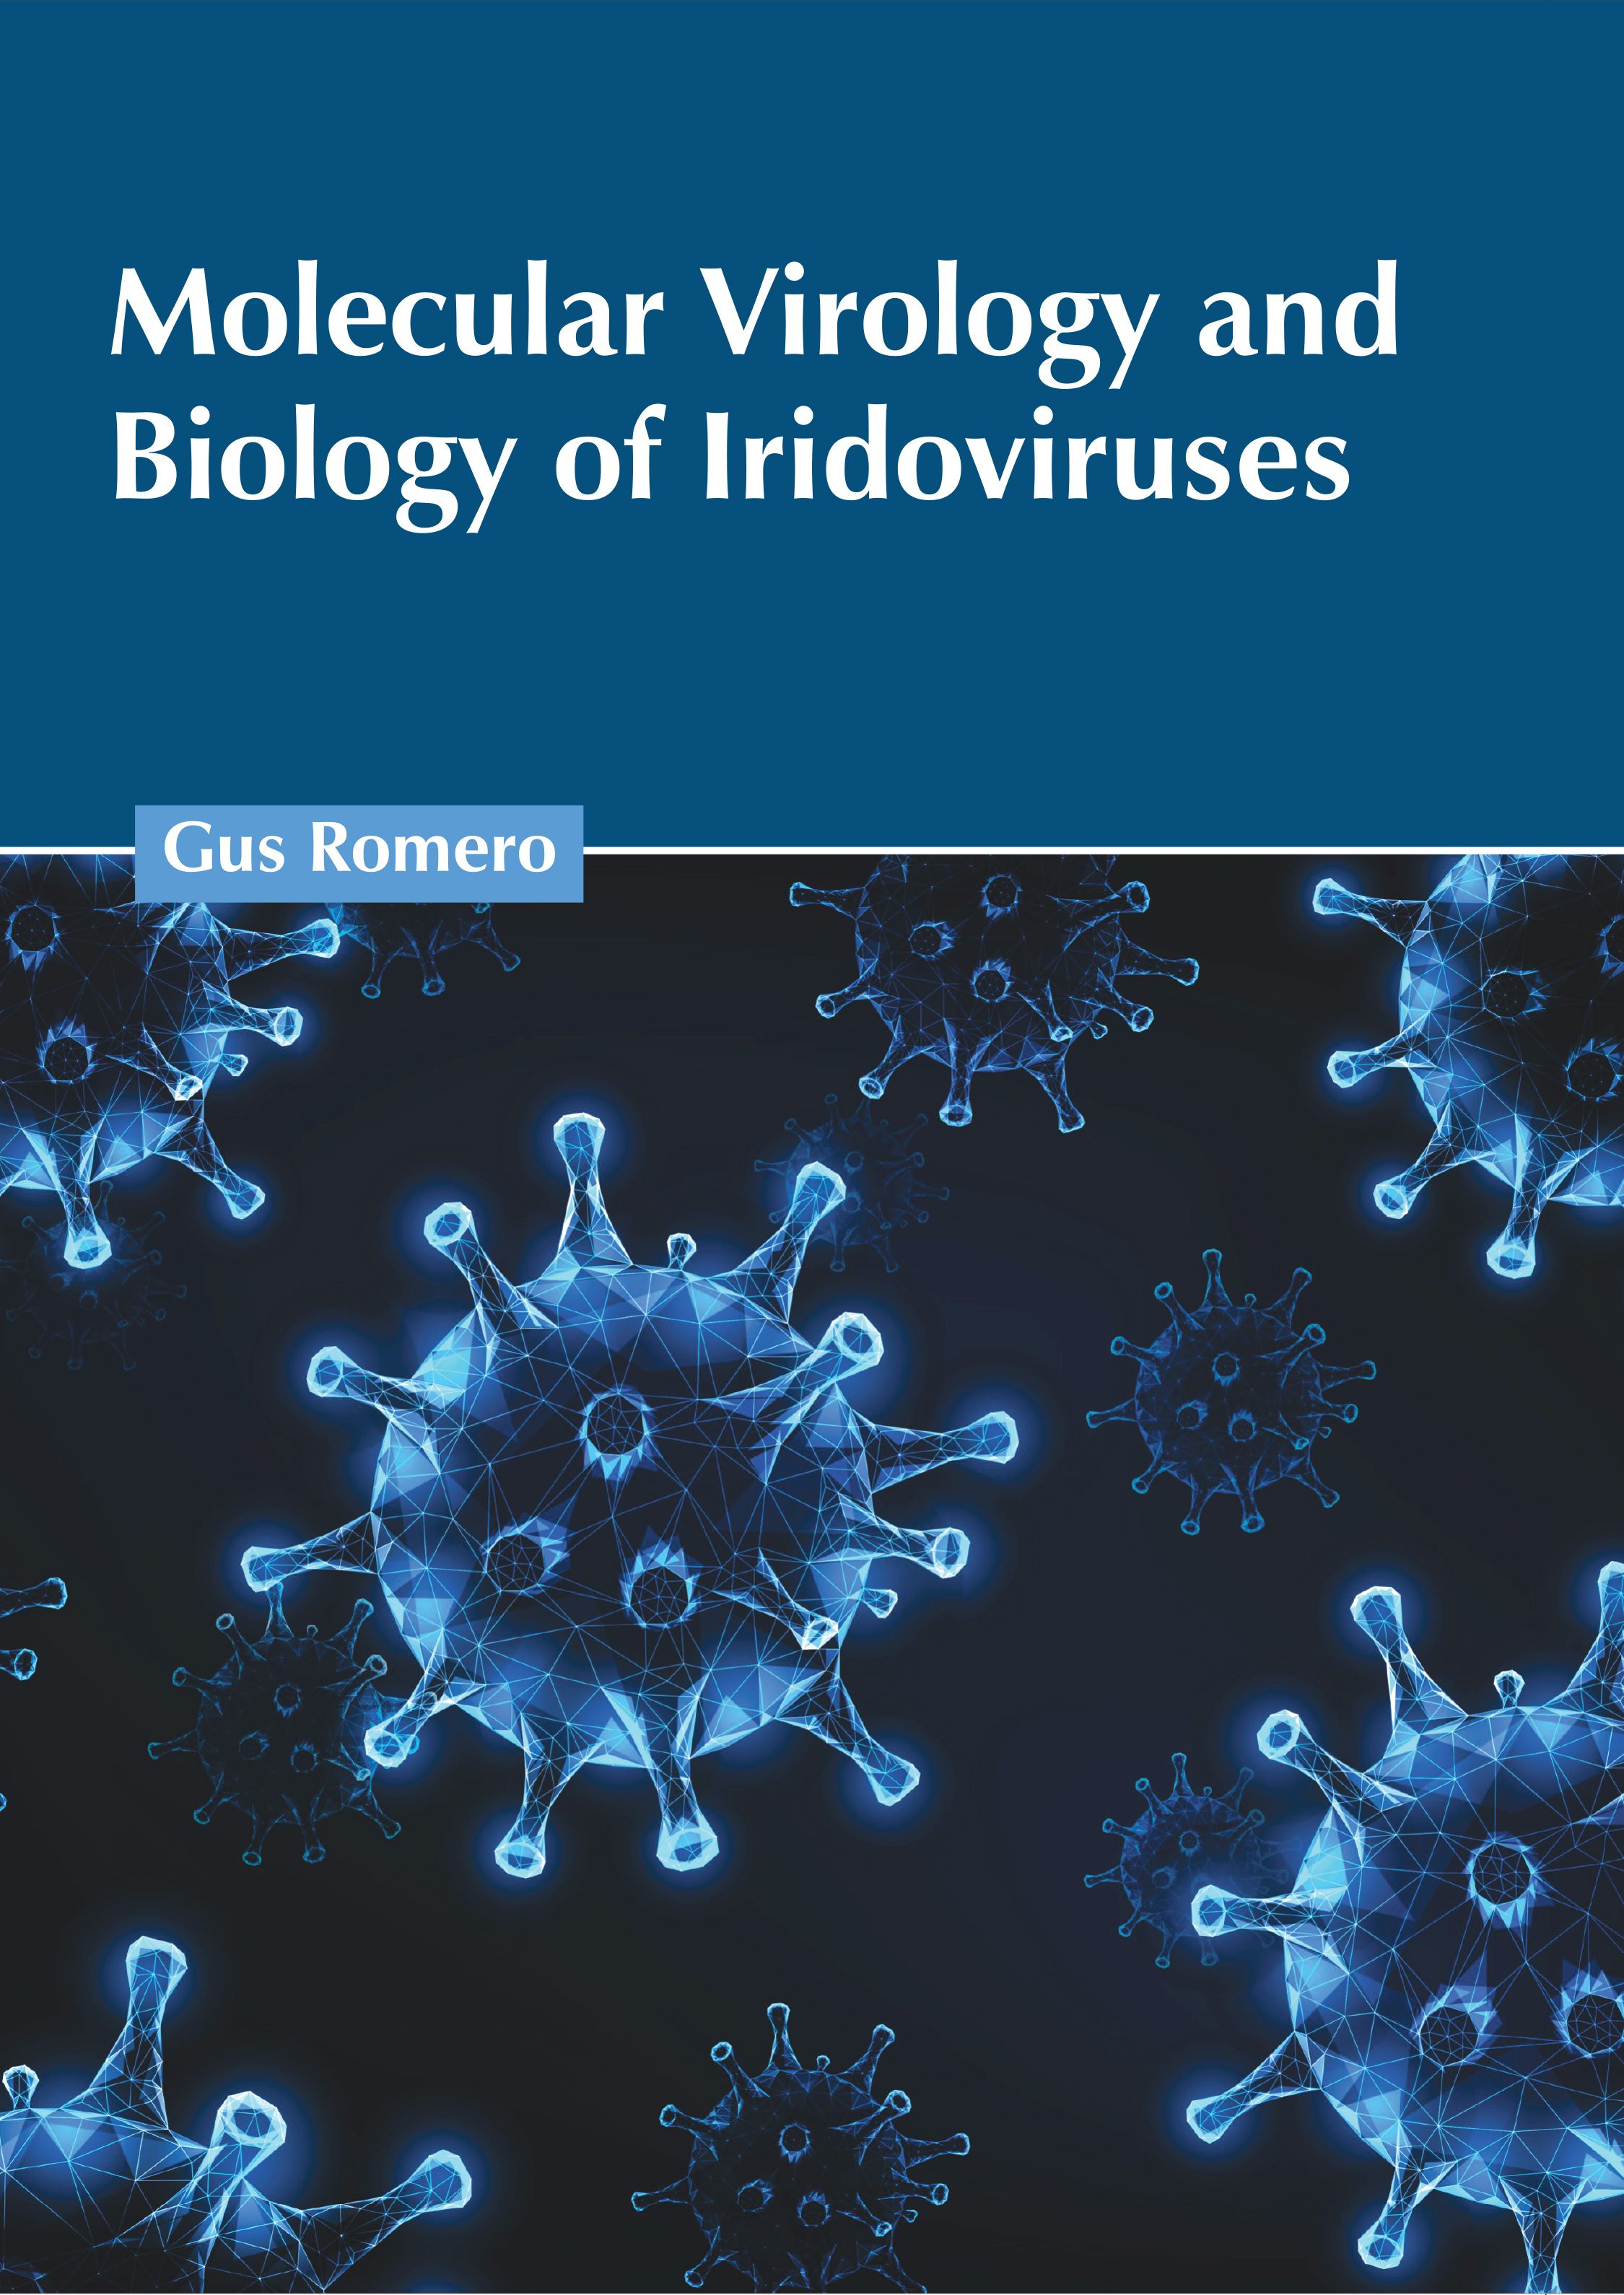 MOLECULAR VIROLOGY AND BIOLOGY OF IRIDOVIRUSES